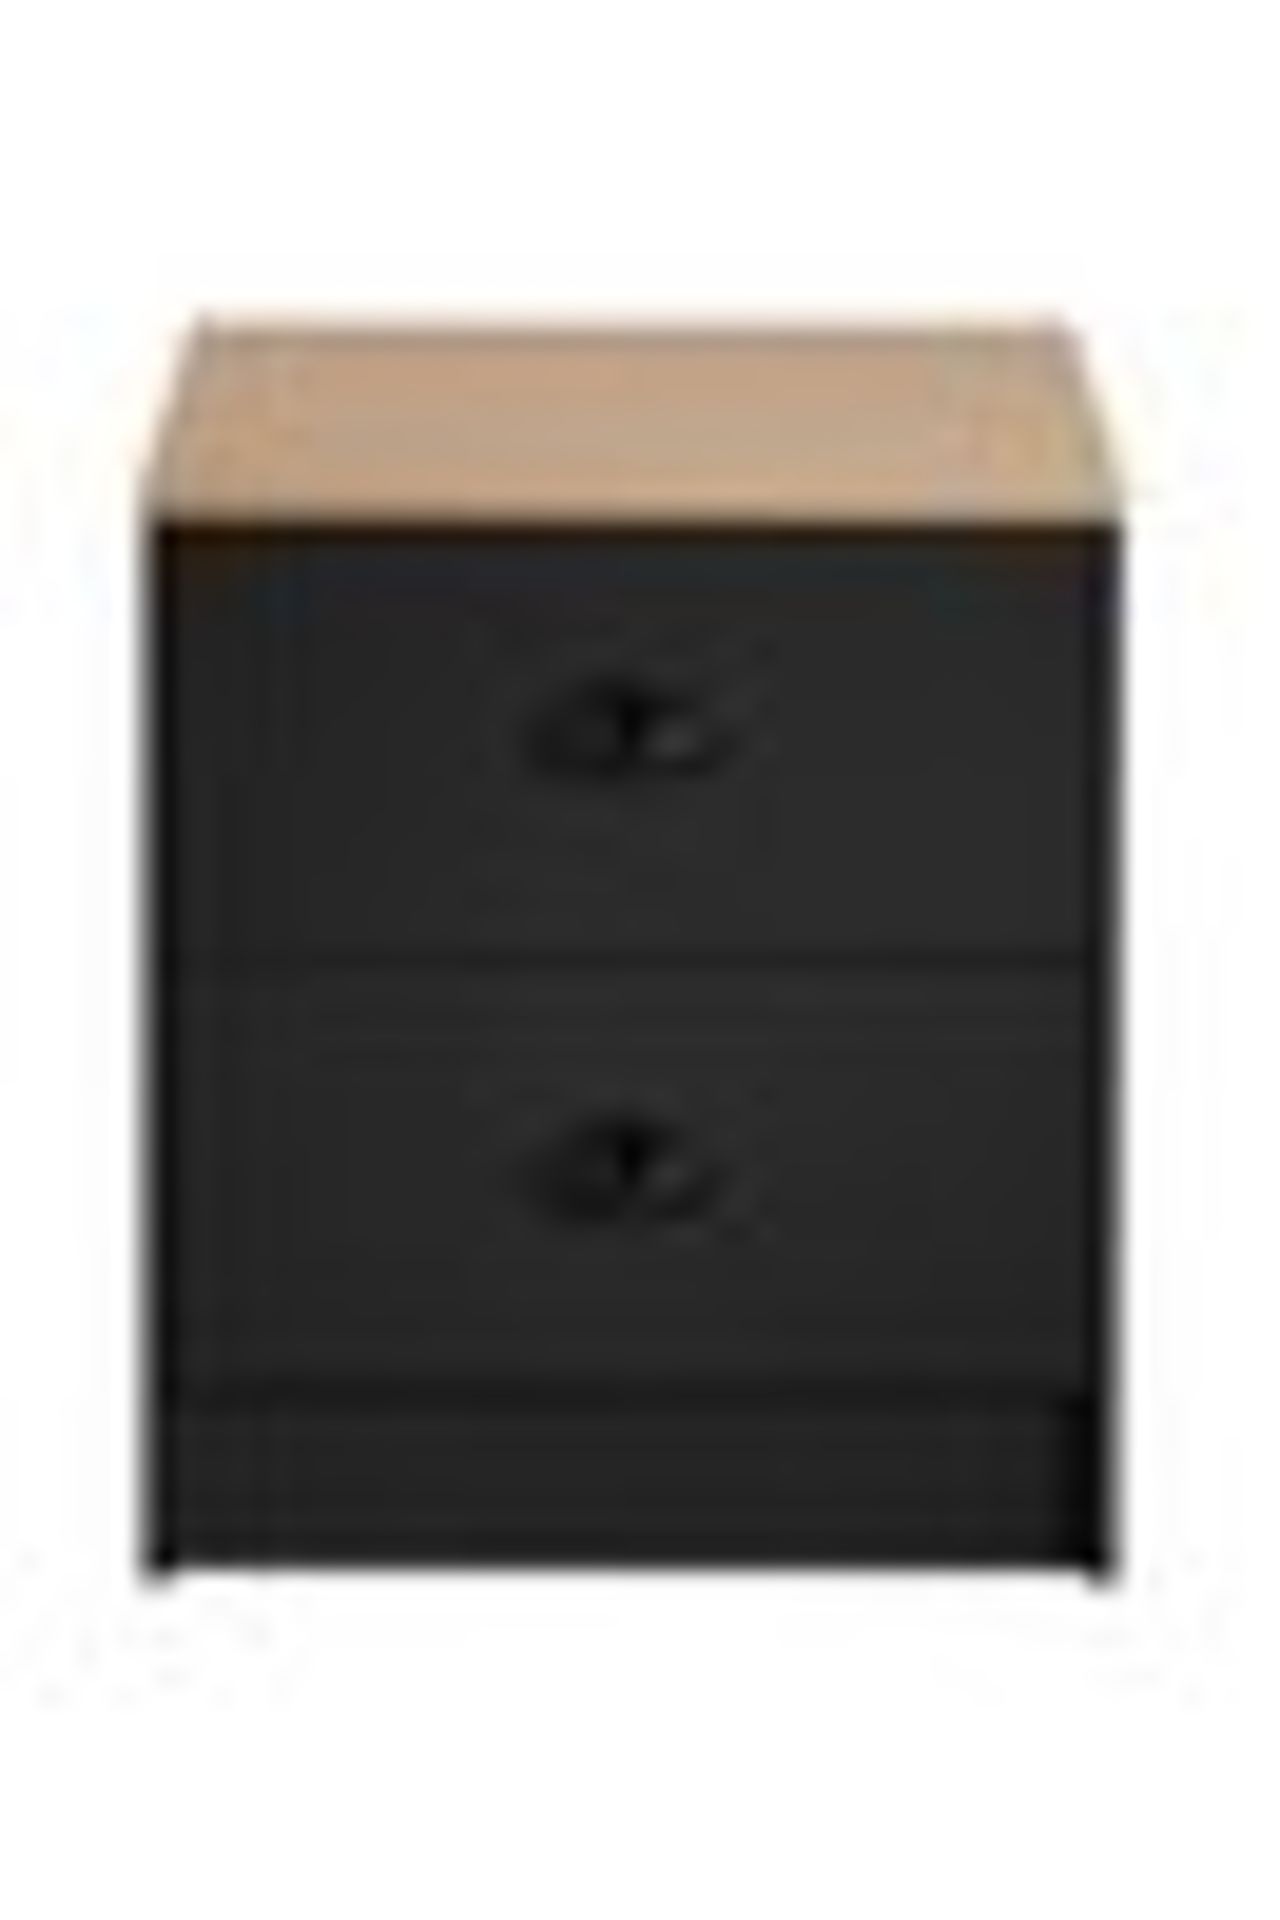 Lloyd Pascal 2 Drawer Cabinet, Black and Oak Effect. RRP £45